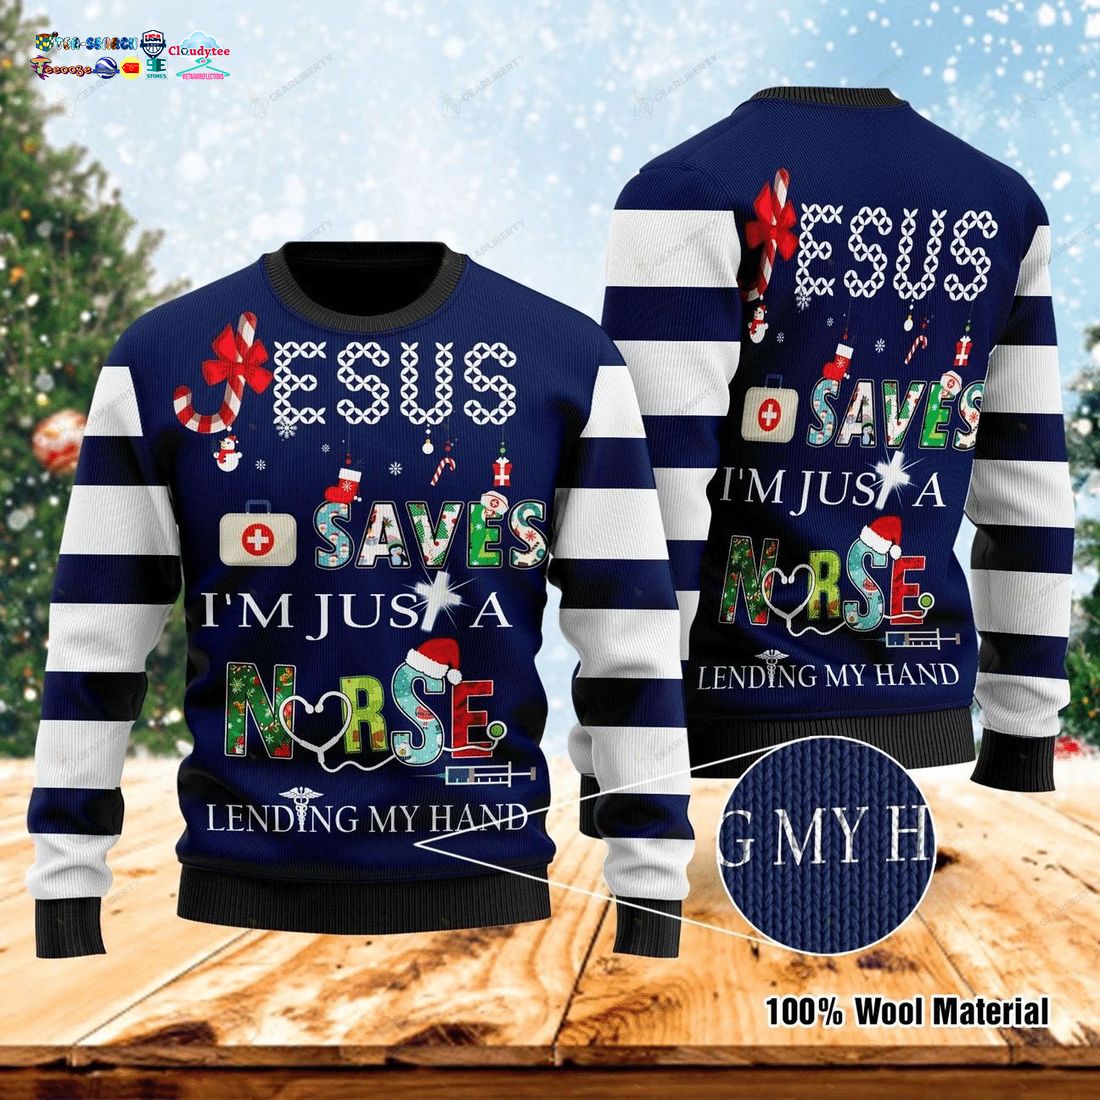 jesus-saves-im-just-a-nurse-lending-my-hand-ugly-christmas-sweater-1-qZ11n.jpg